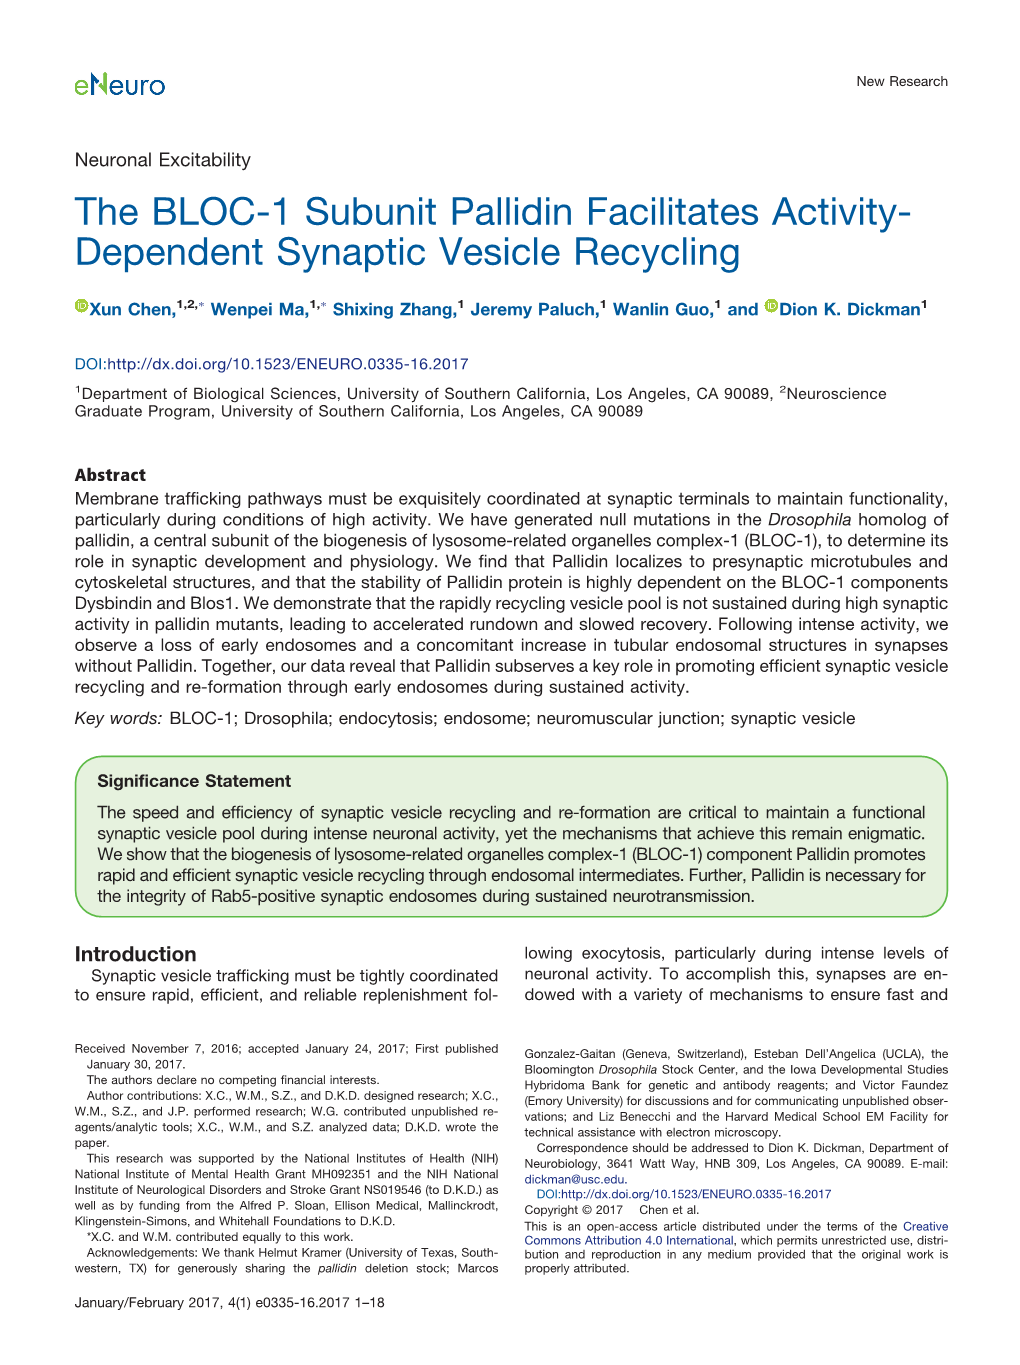 The BLOC-1 Subunit Pallidin Facilitates Activity-Dependent